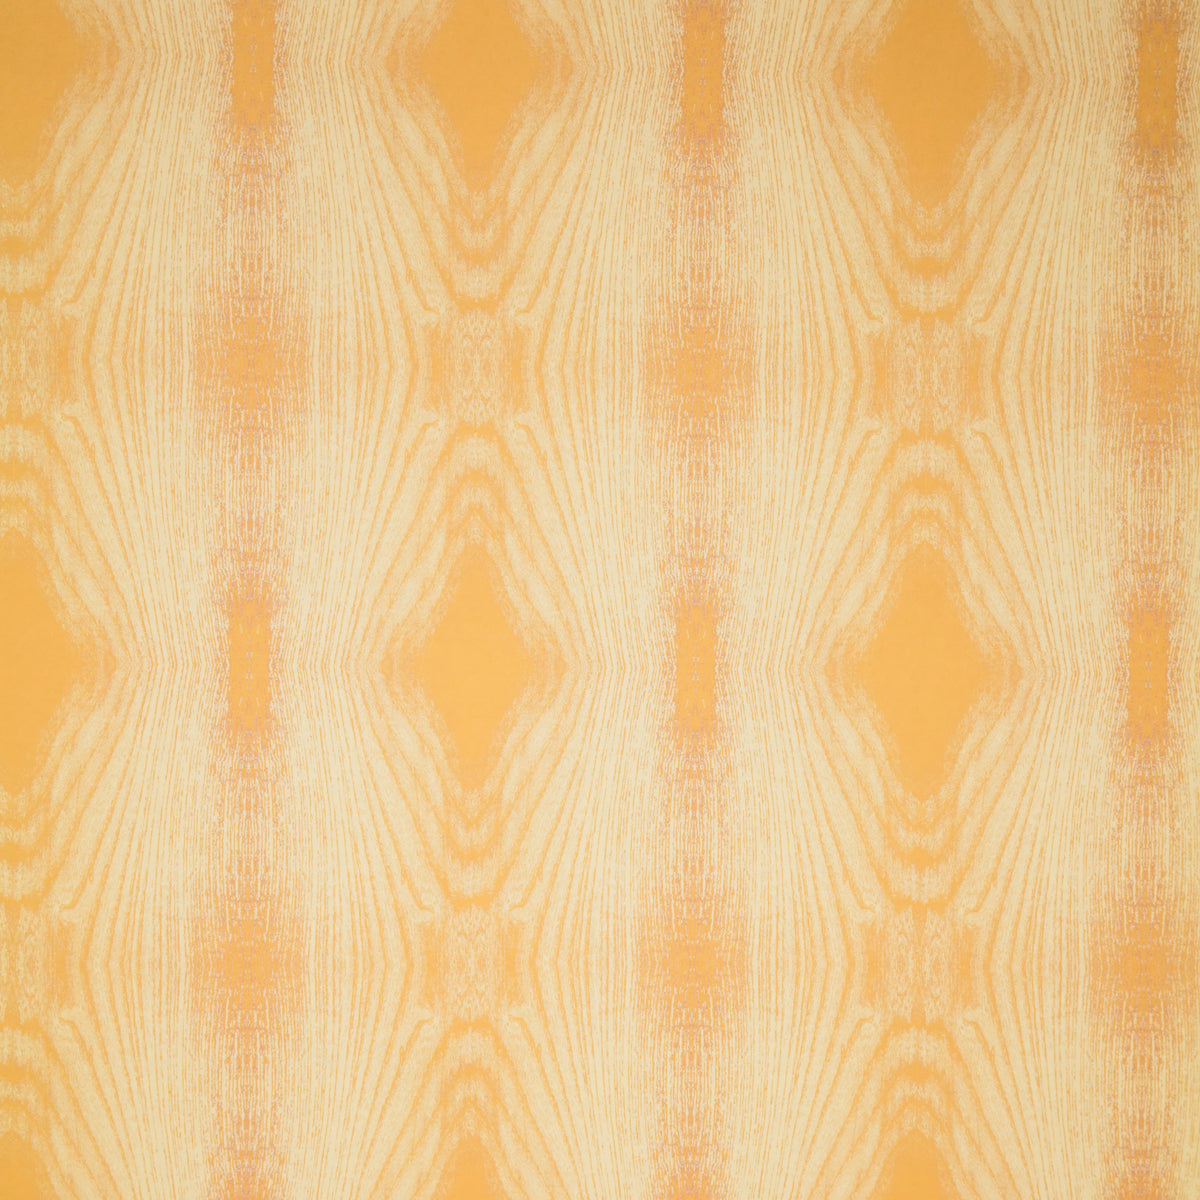 Laz Studio Woodgrain Digital Wallpaper (Cream)